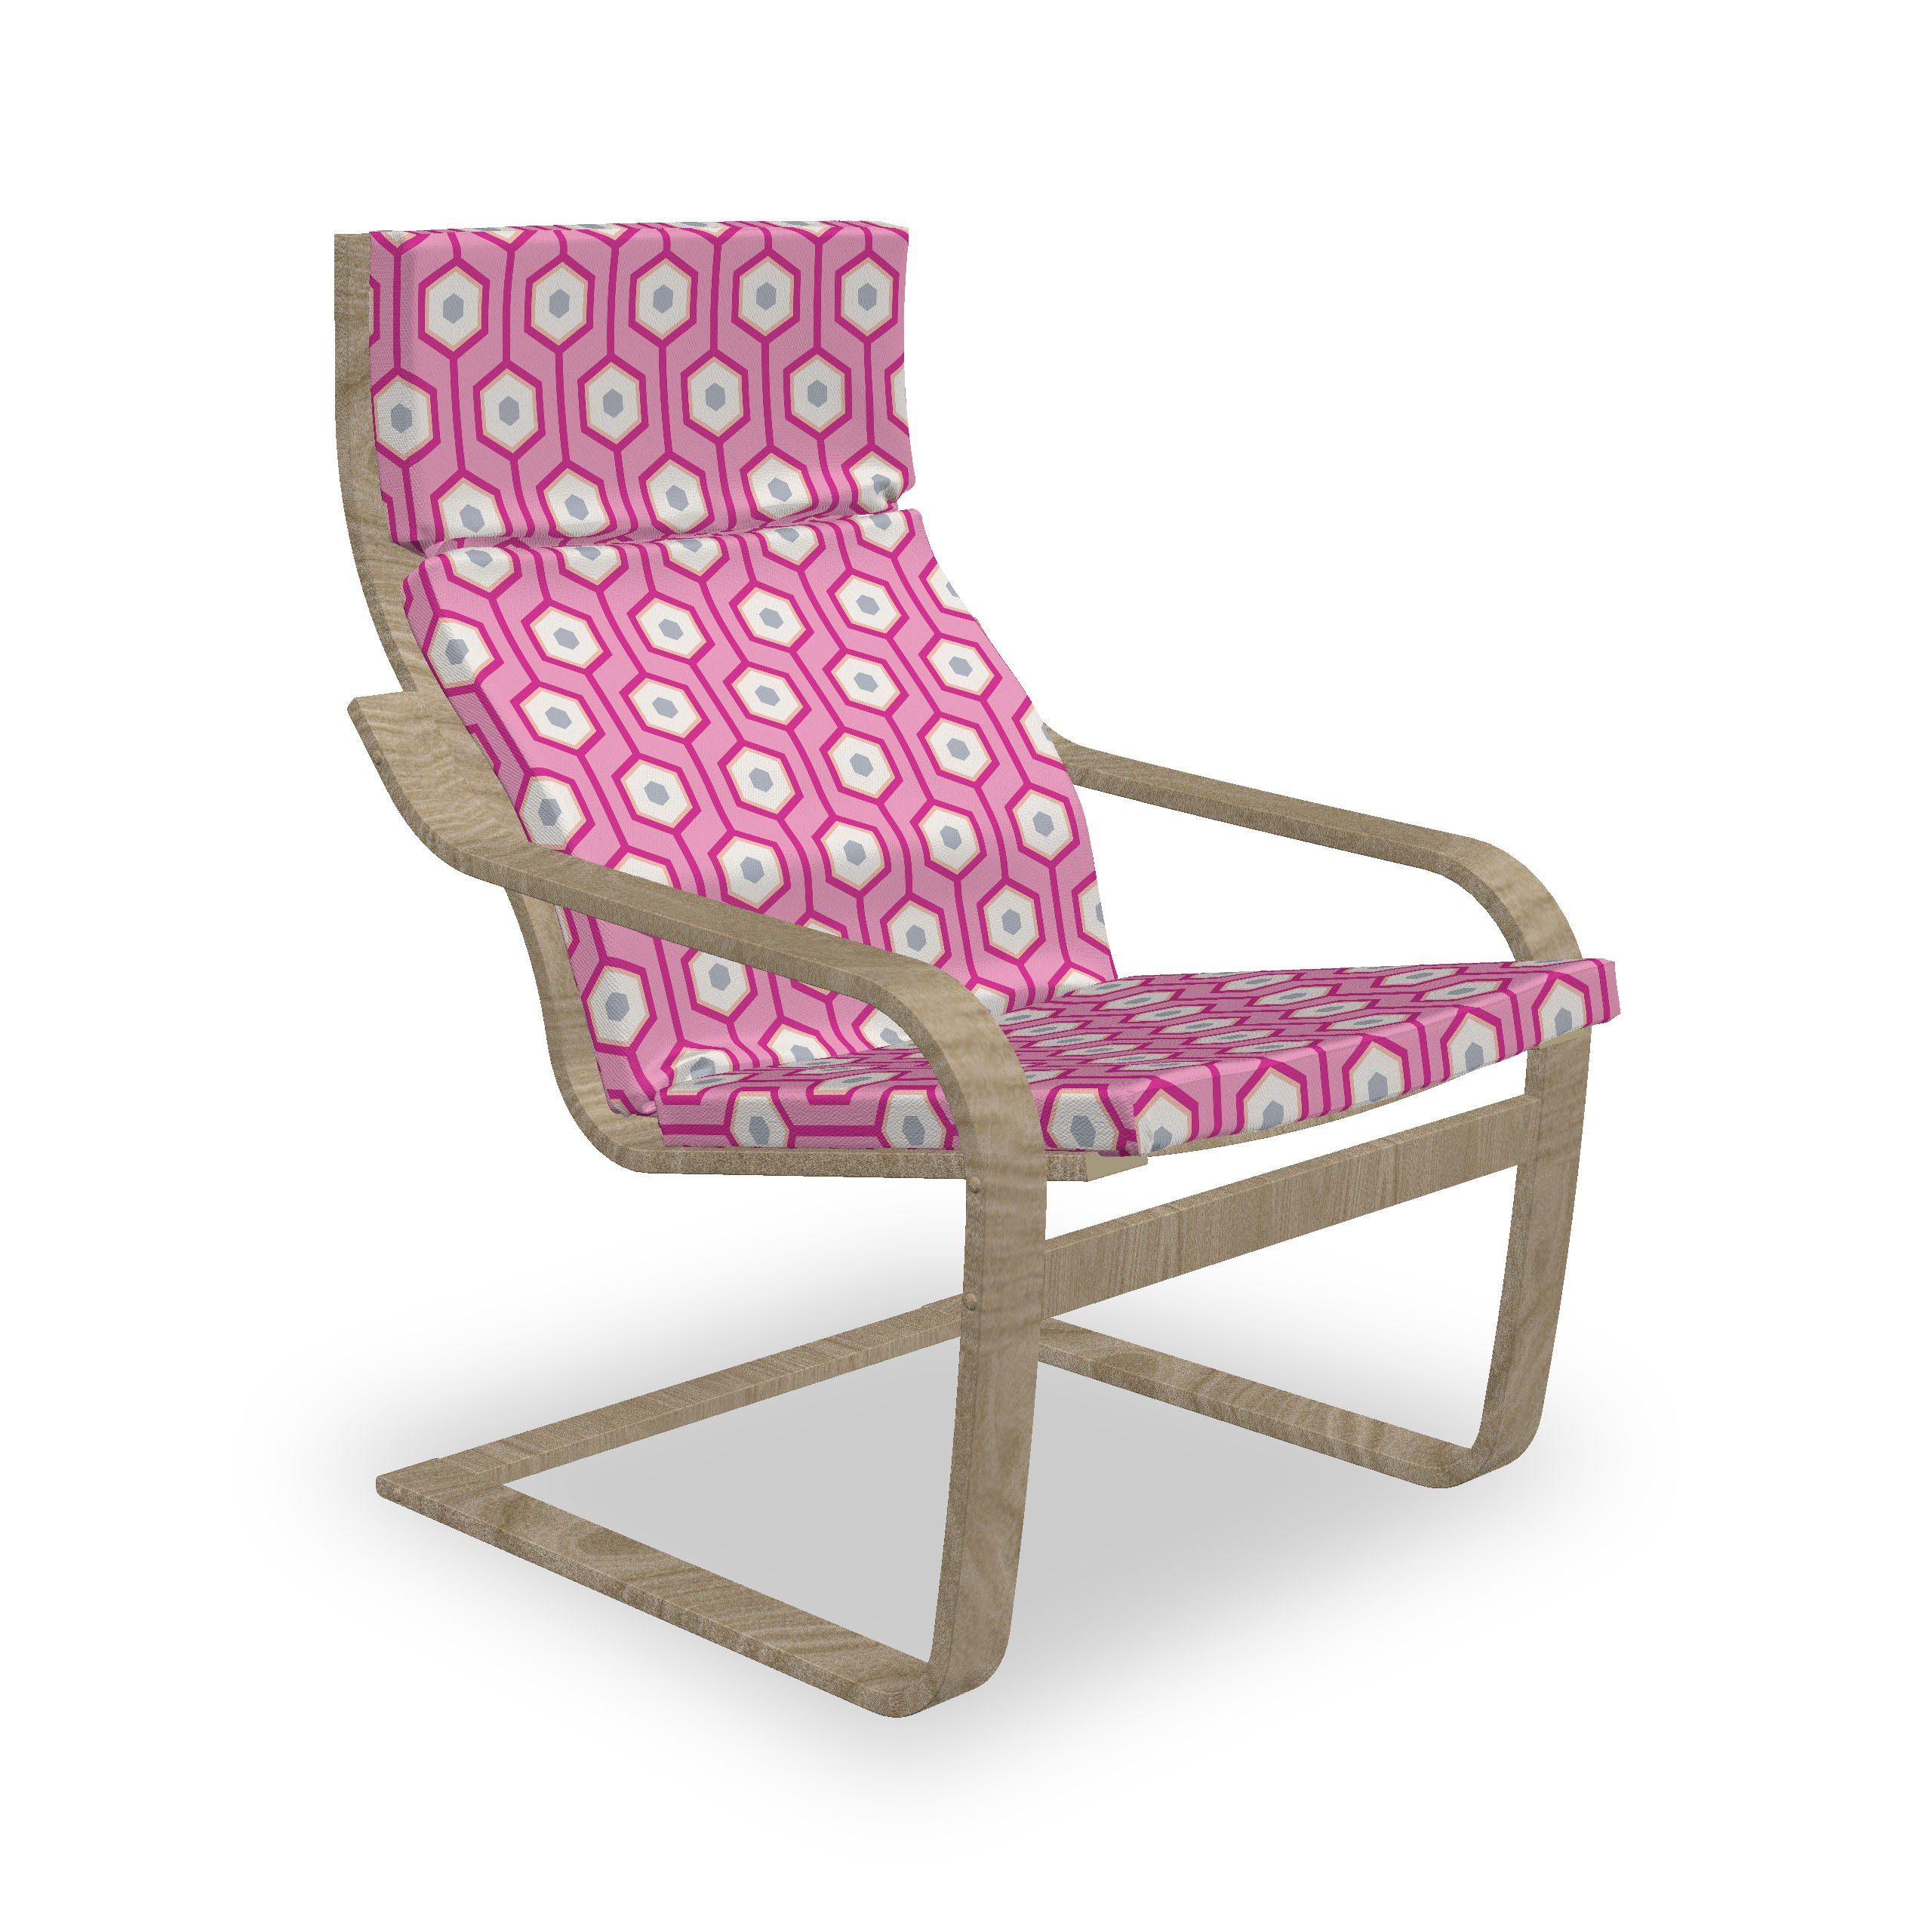 Abakuhaus Stuhlkissen Sitzkissen mit Stuhlkissen mit Hakenschlaufe und Reißverschluss, Rosa Vertikal Hexagons Dots